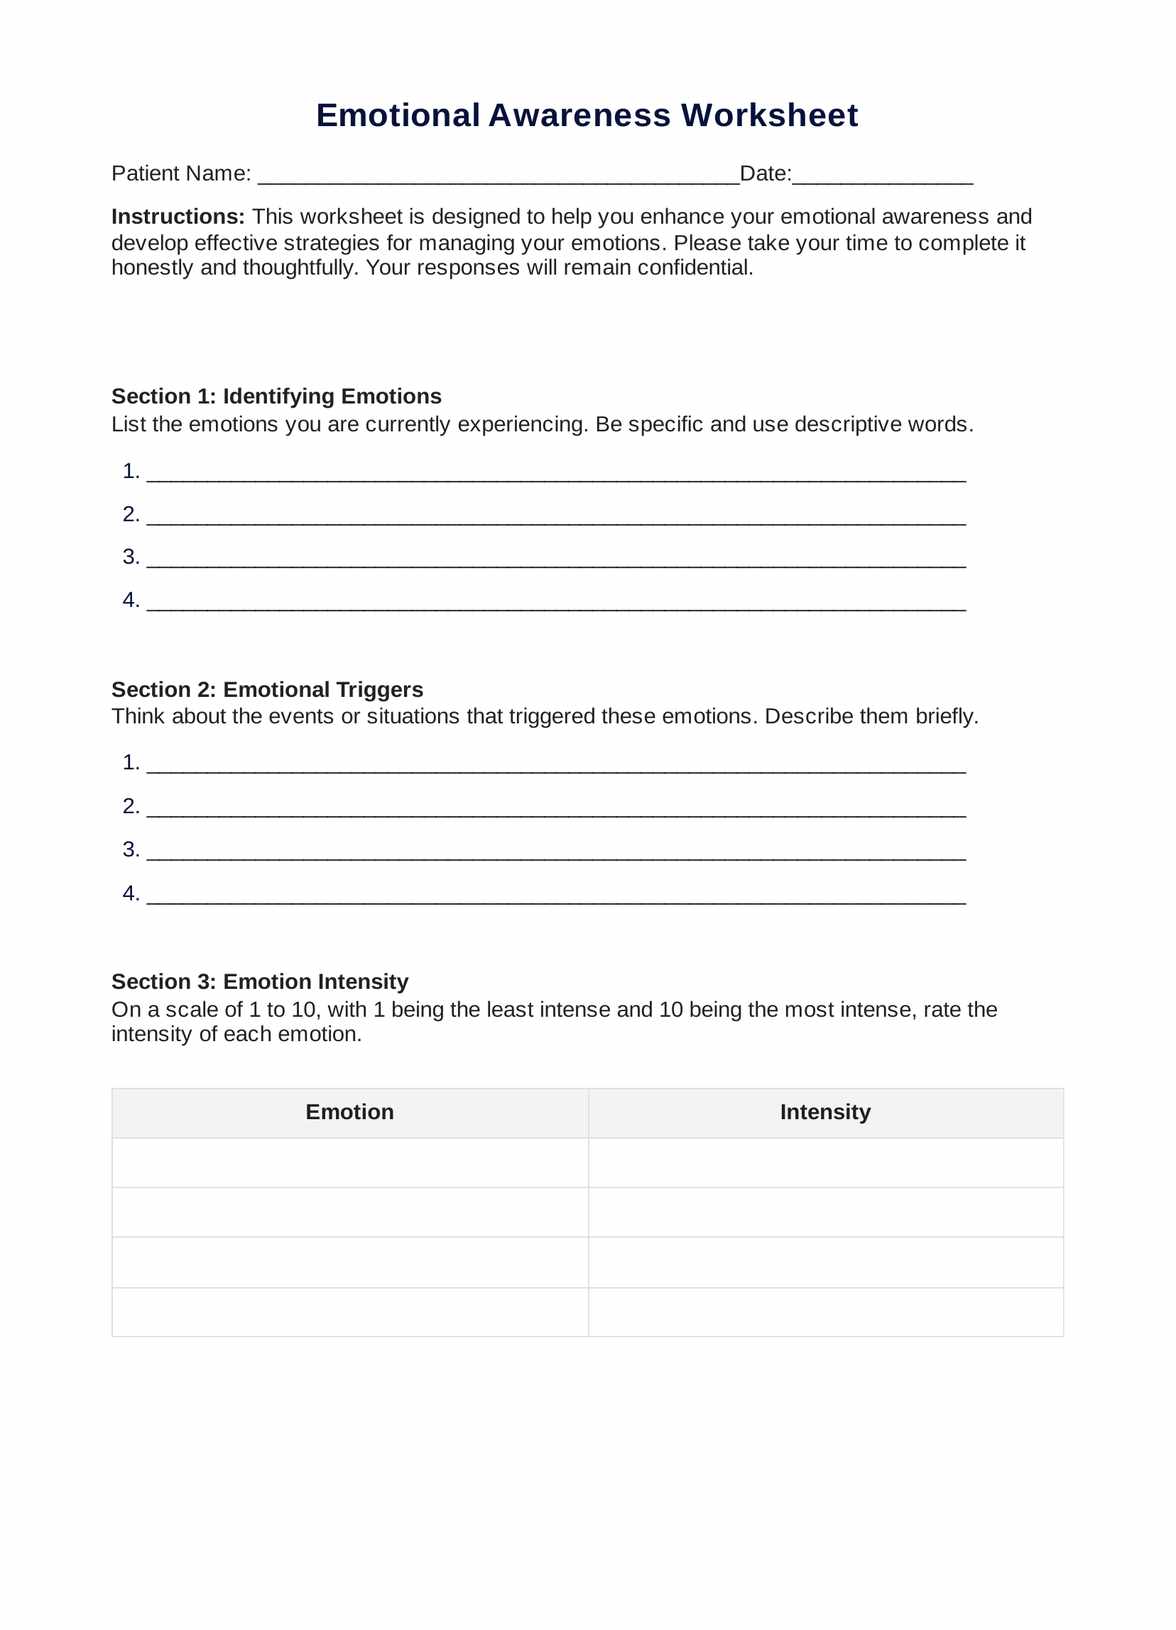 Emotional Awareness Worksheets PDF Example